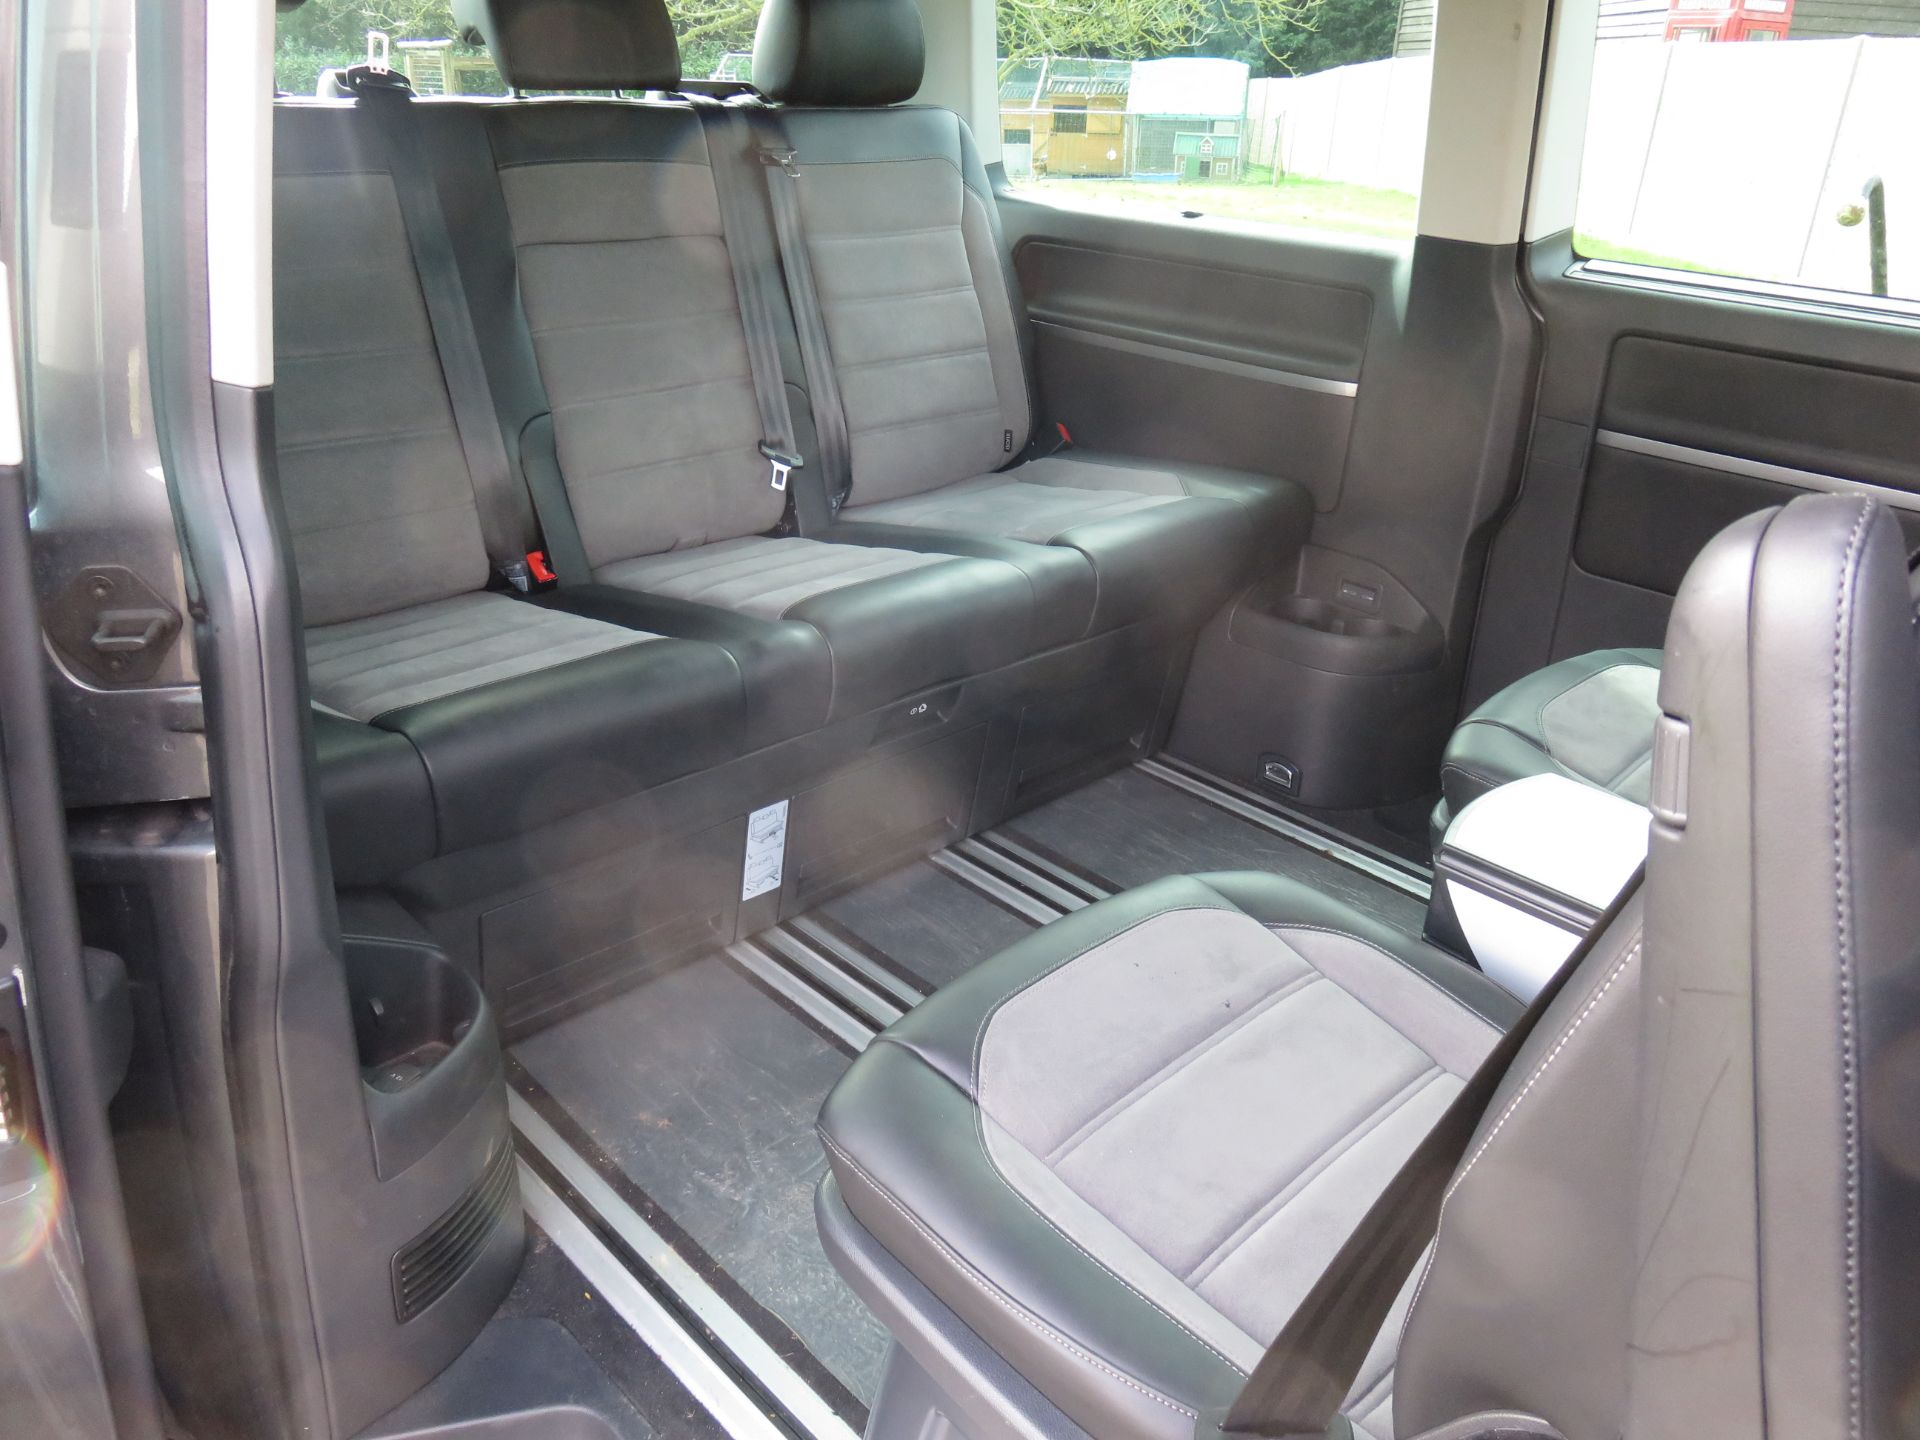 1 Volkswagen Caravelle 2.0 TDI (150PS) Executive BMT SNB DSG 7 Seat Five Door MPV - Image 10 of 17